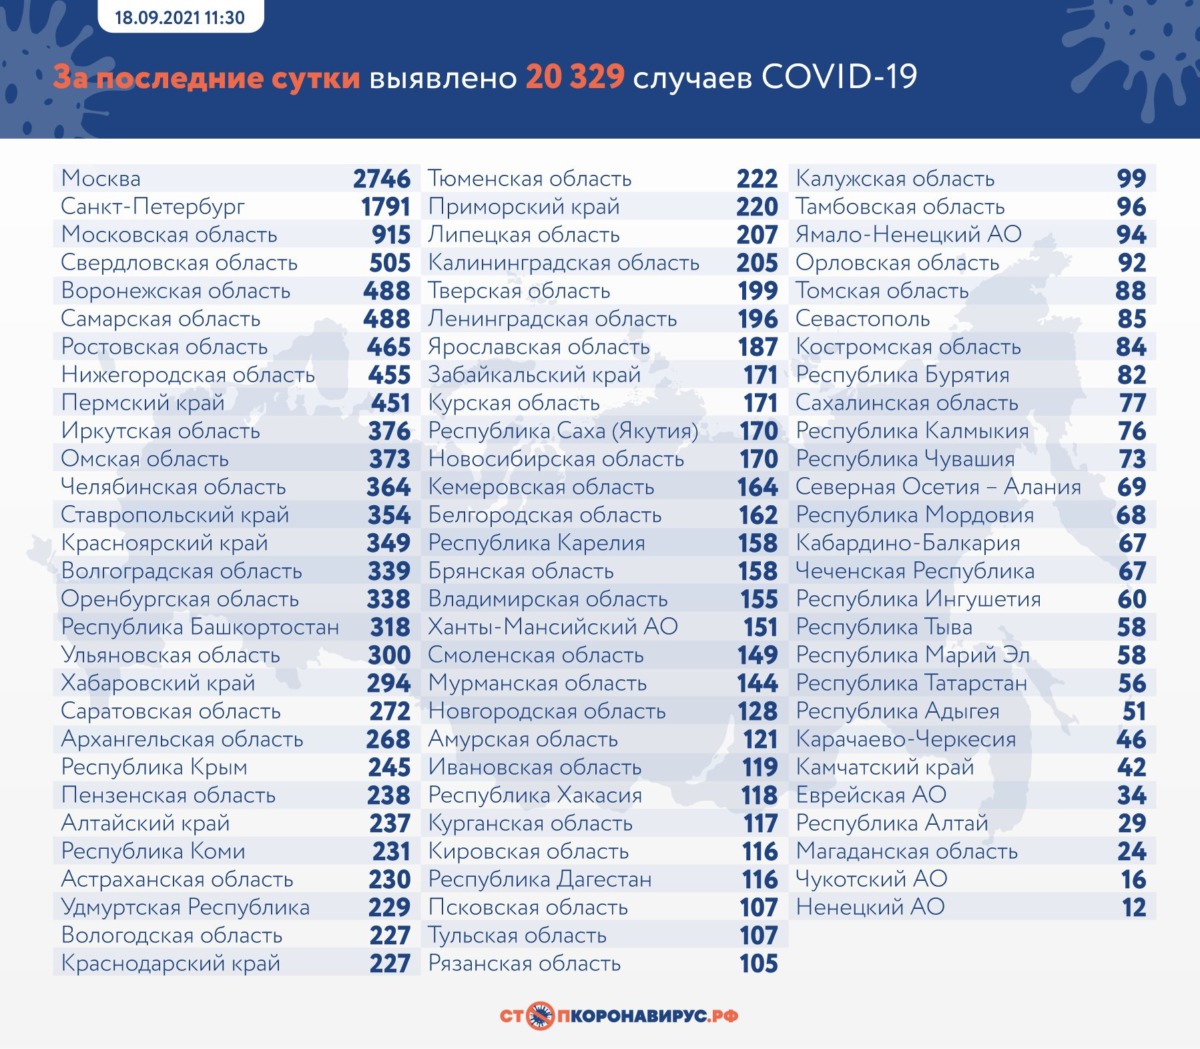 Оперативная статистика по коронавирусу в России на 18 сентября